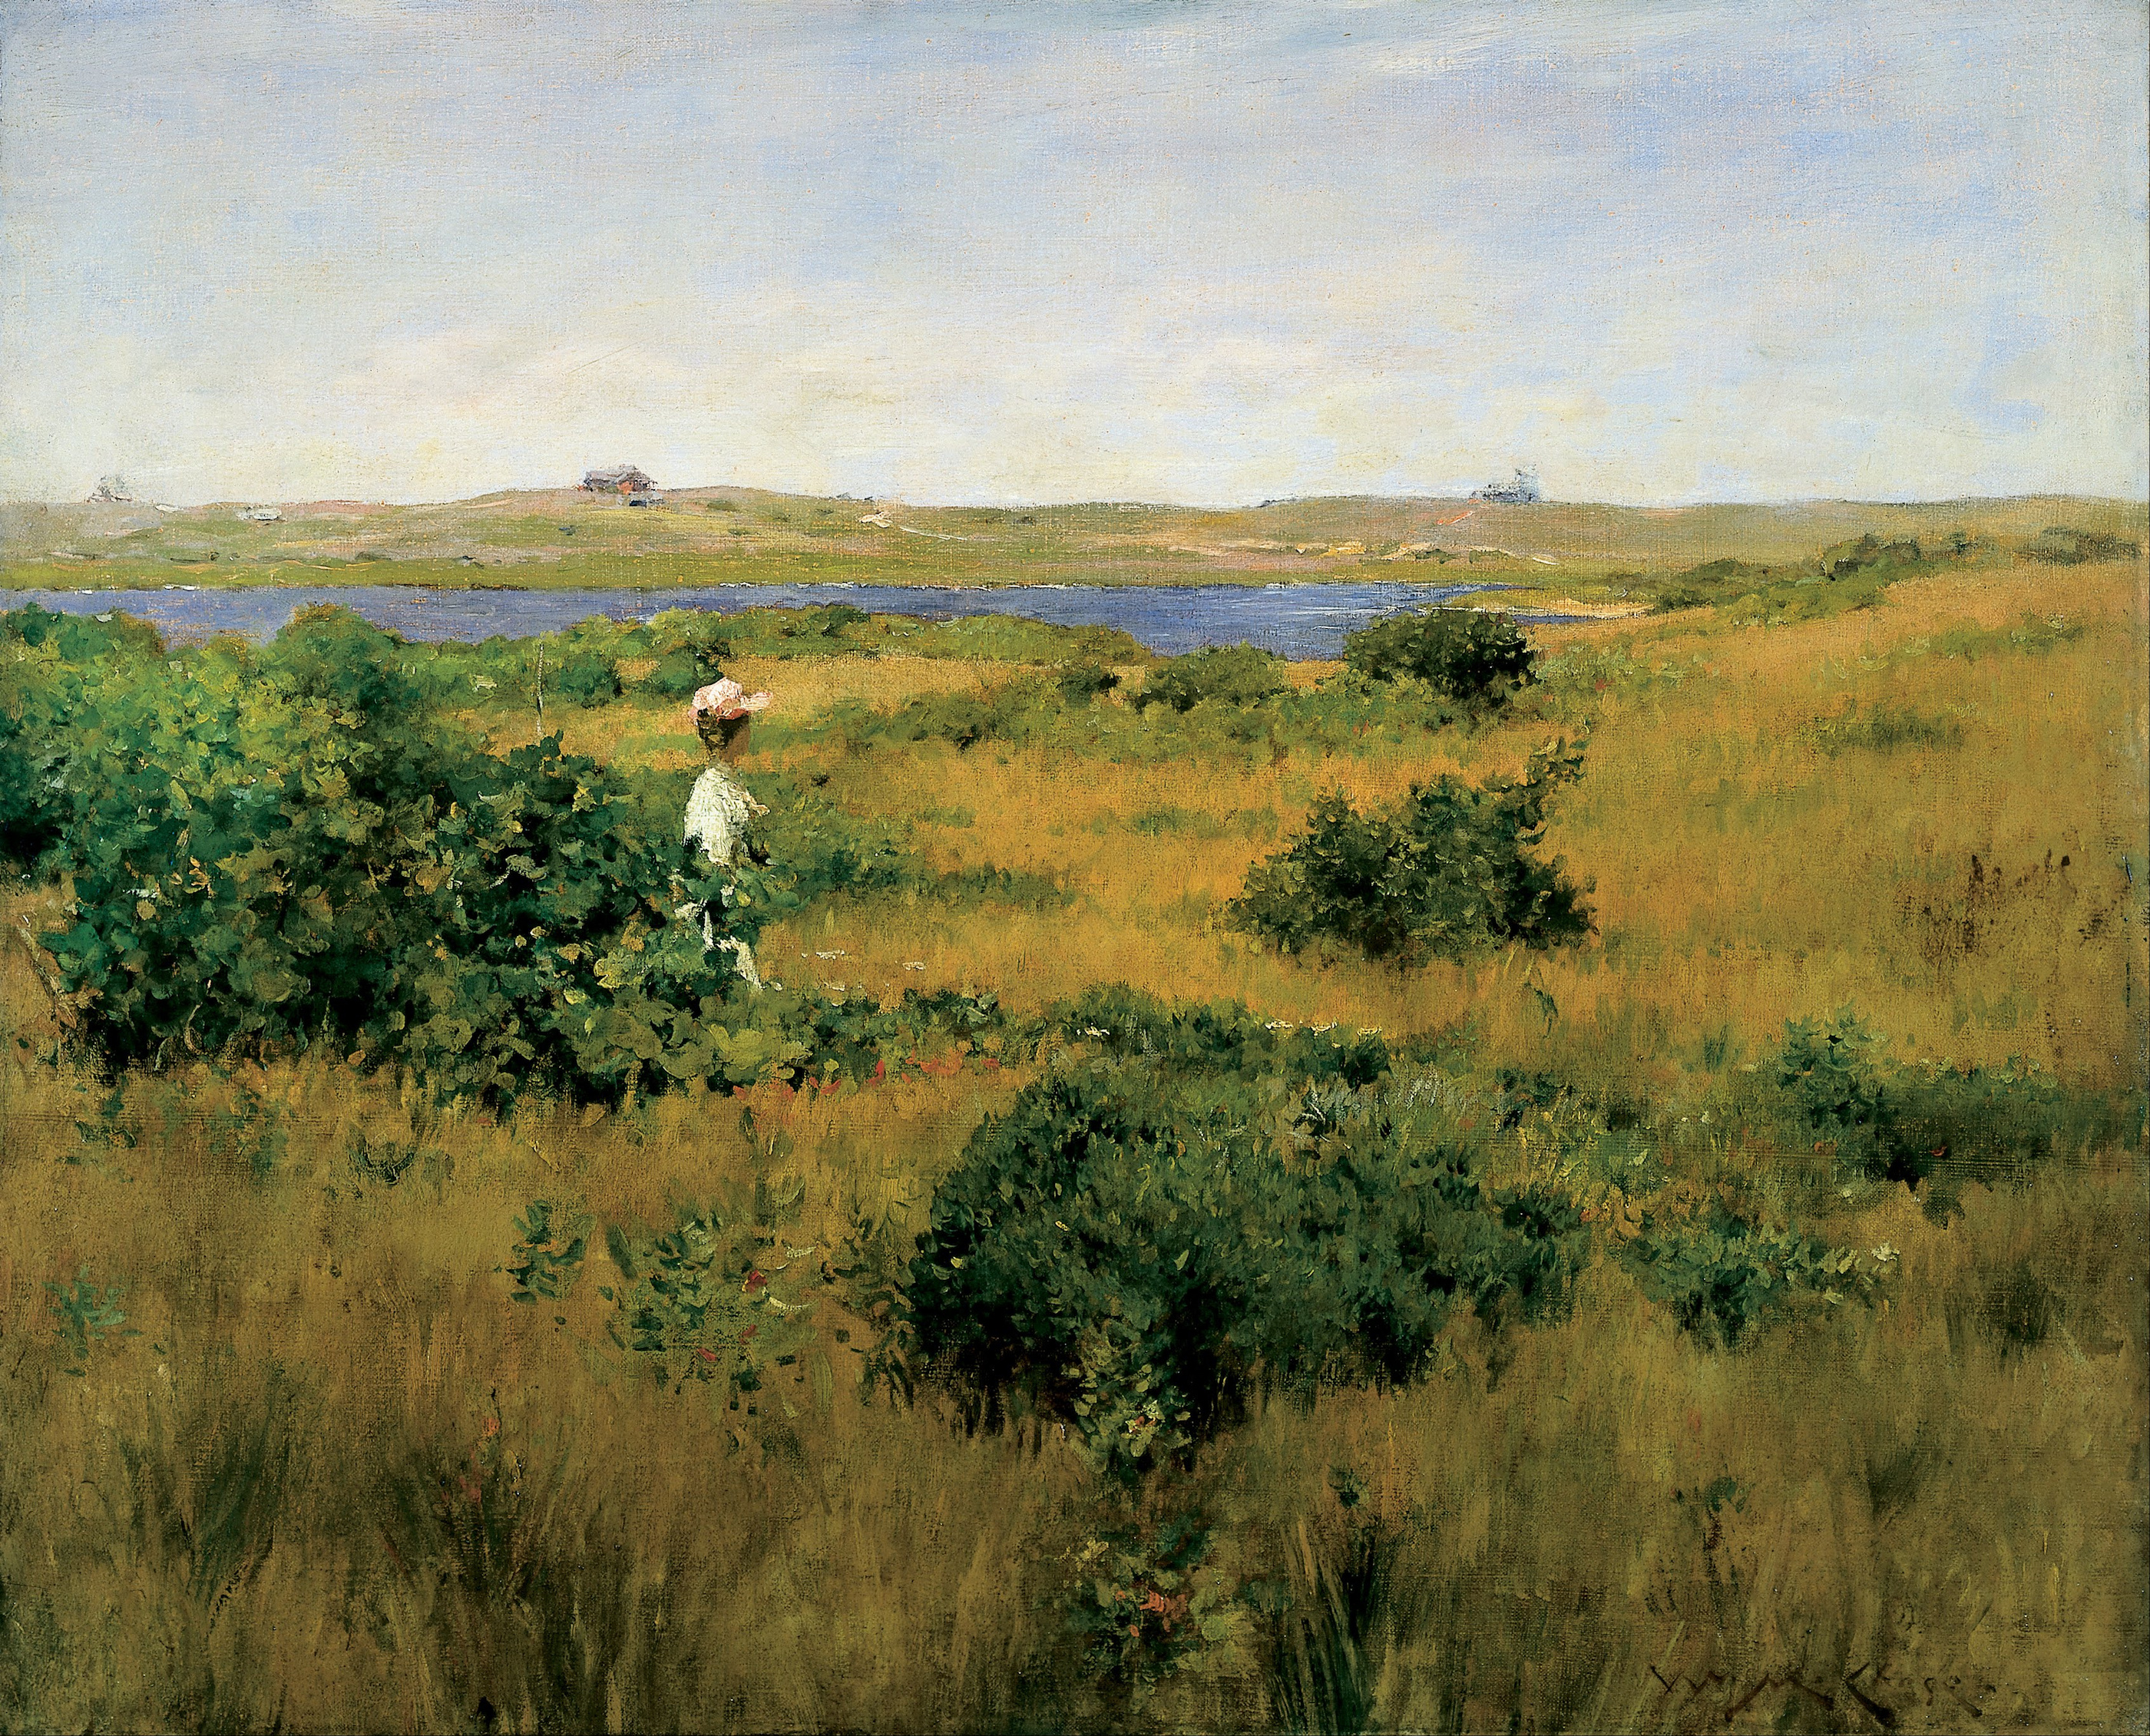 Summer at Shinnecock Hills by William Merritt Chase  - 1891 - 67.3 x 82.6 cm Cincinnati Art Museum